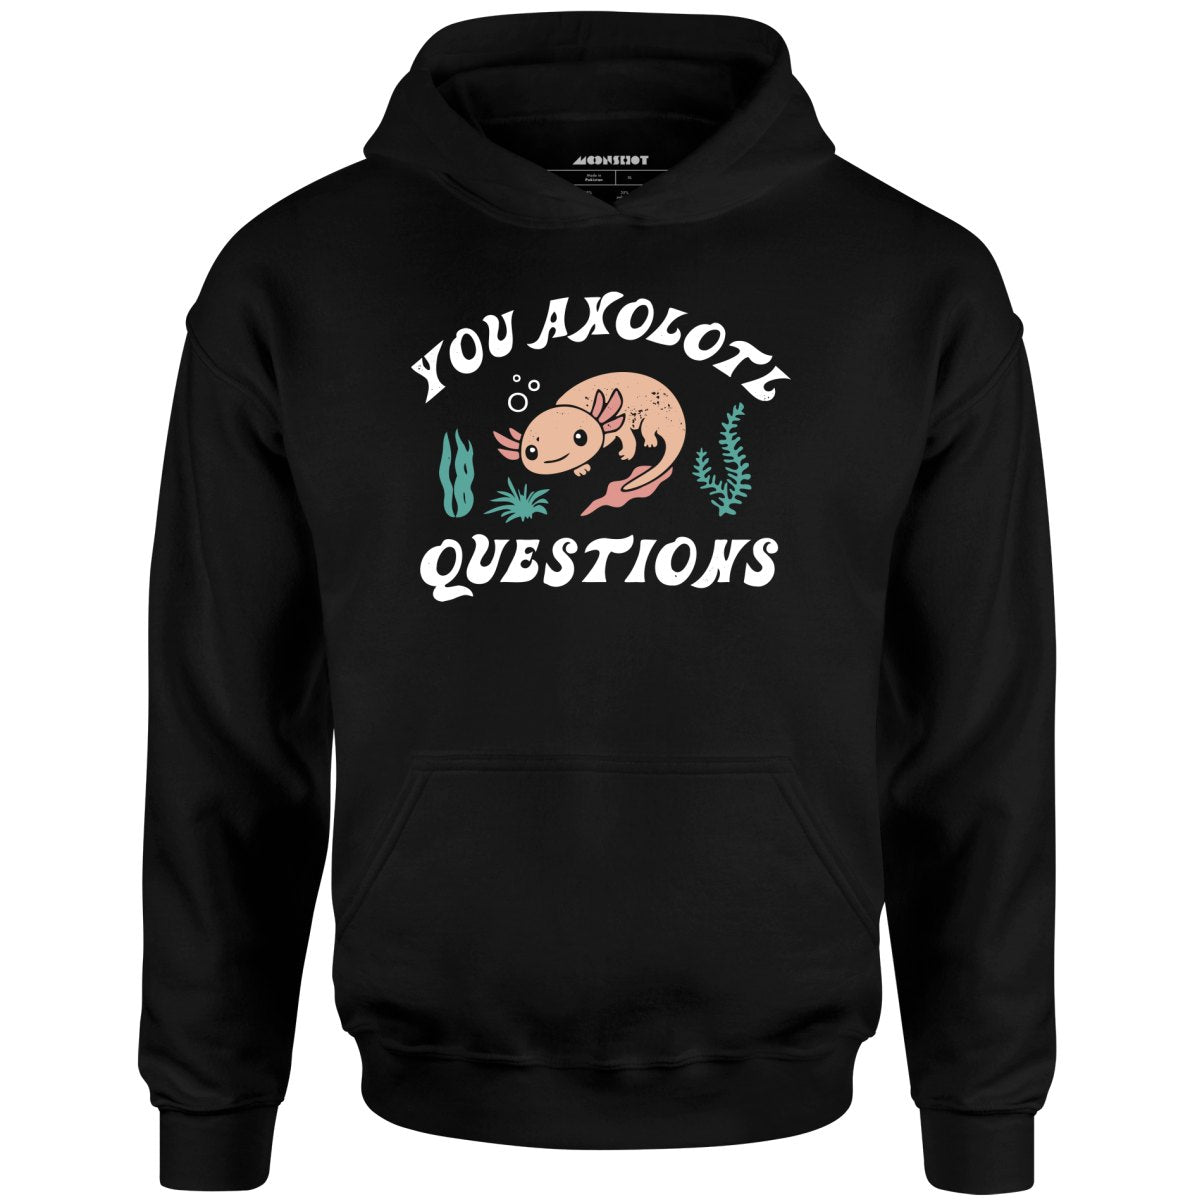 You Axolotl Questions - Unisex Hoodie